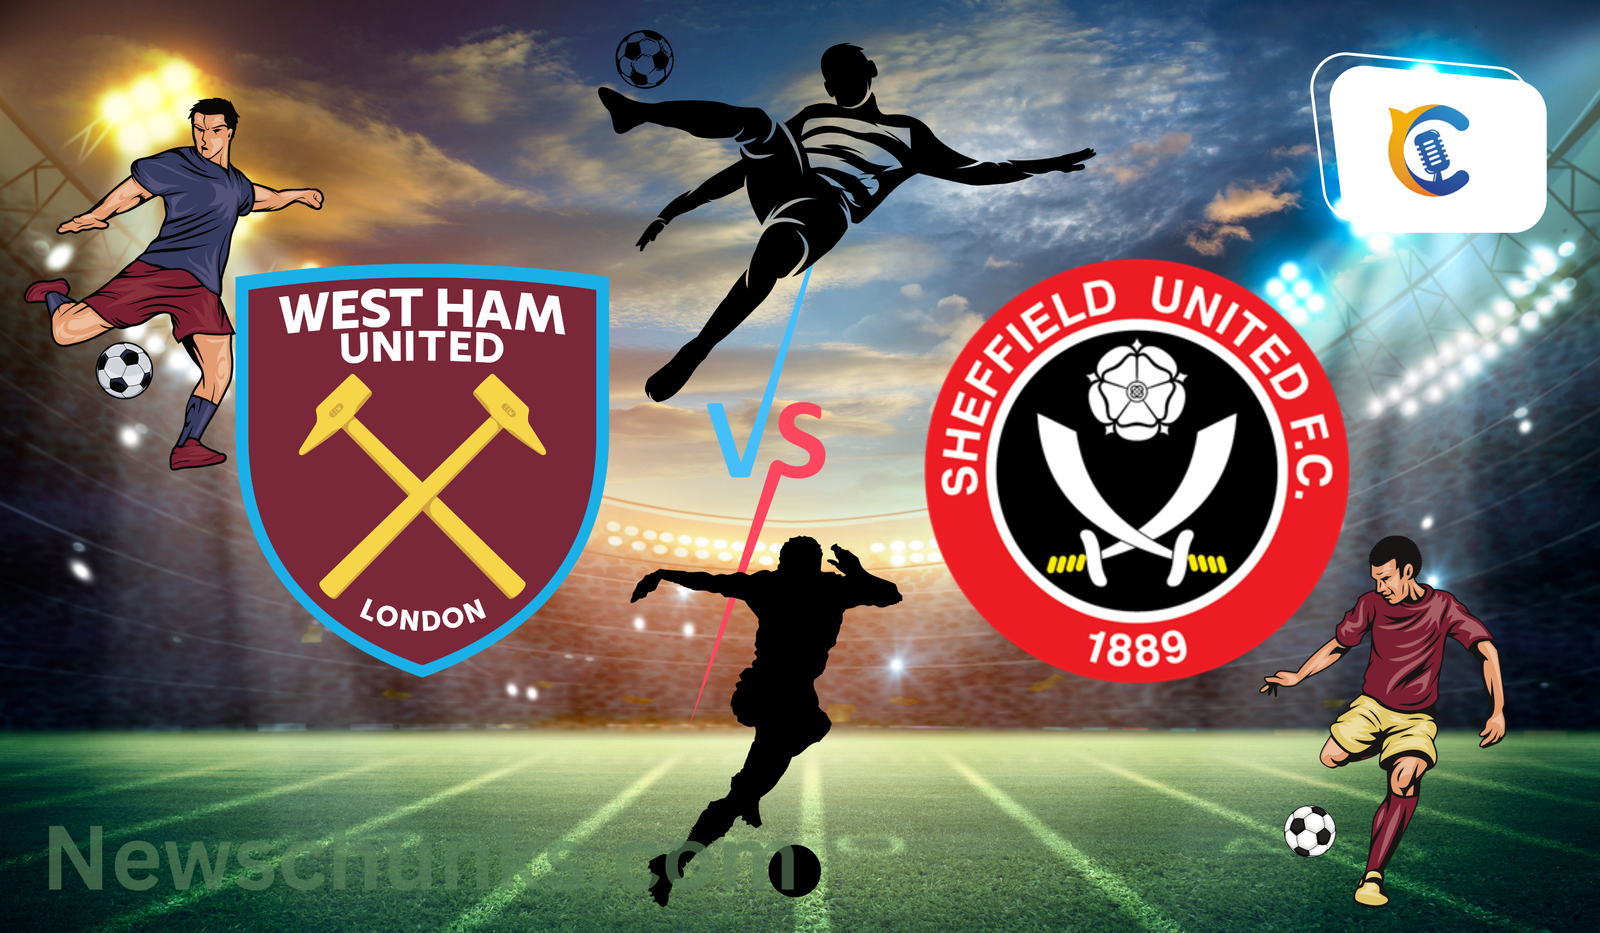 West Ham United vs. Sheffield United Match Analysis